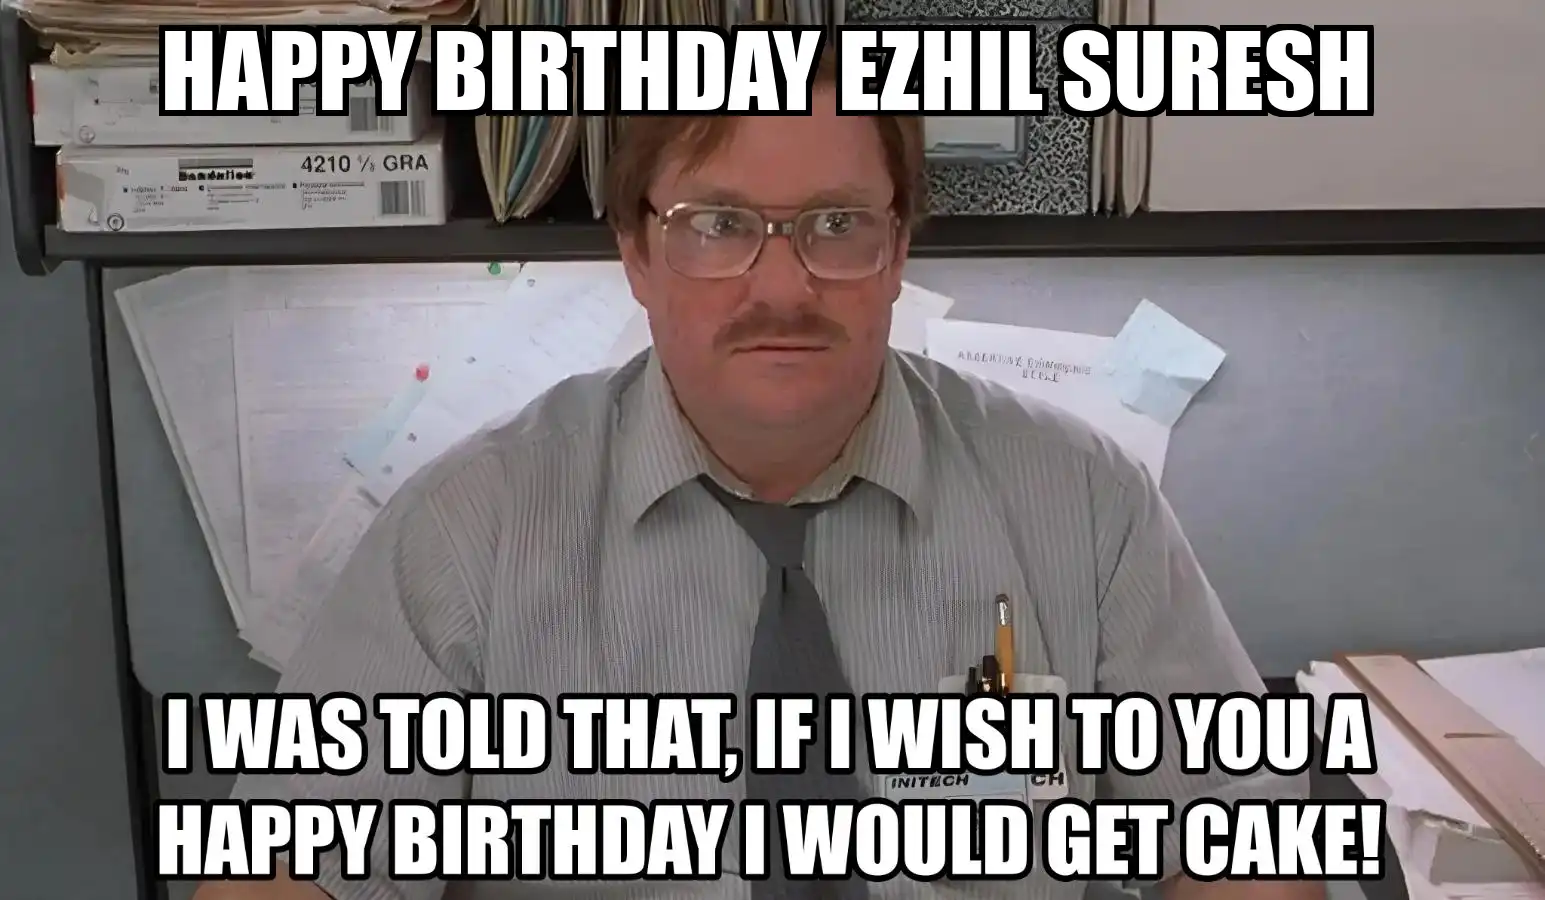 Happy Birthday Ezhil suresh I Would Get A Cake Meme